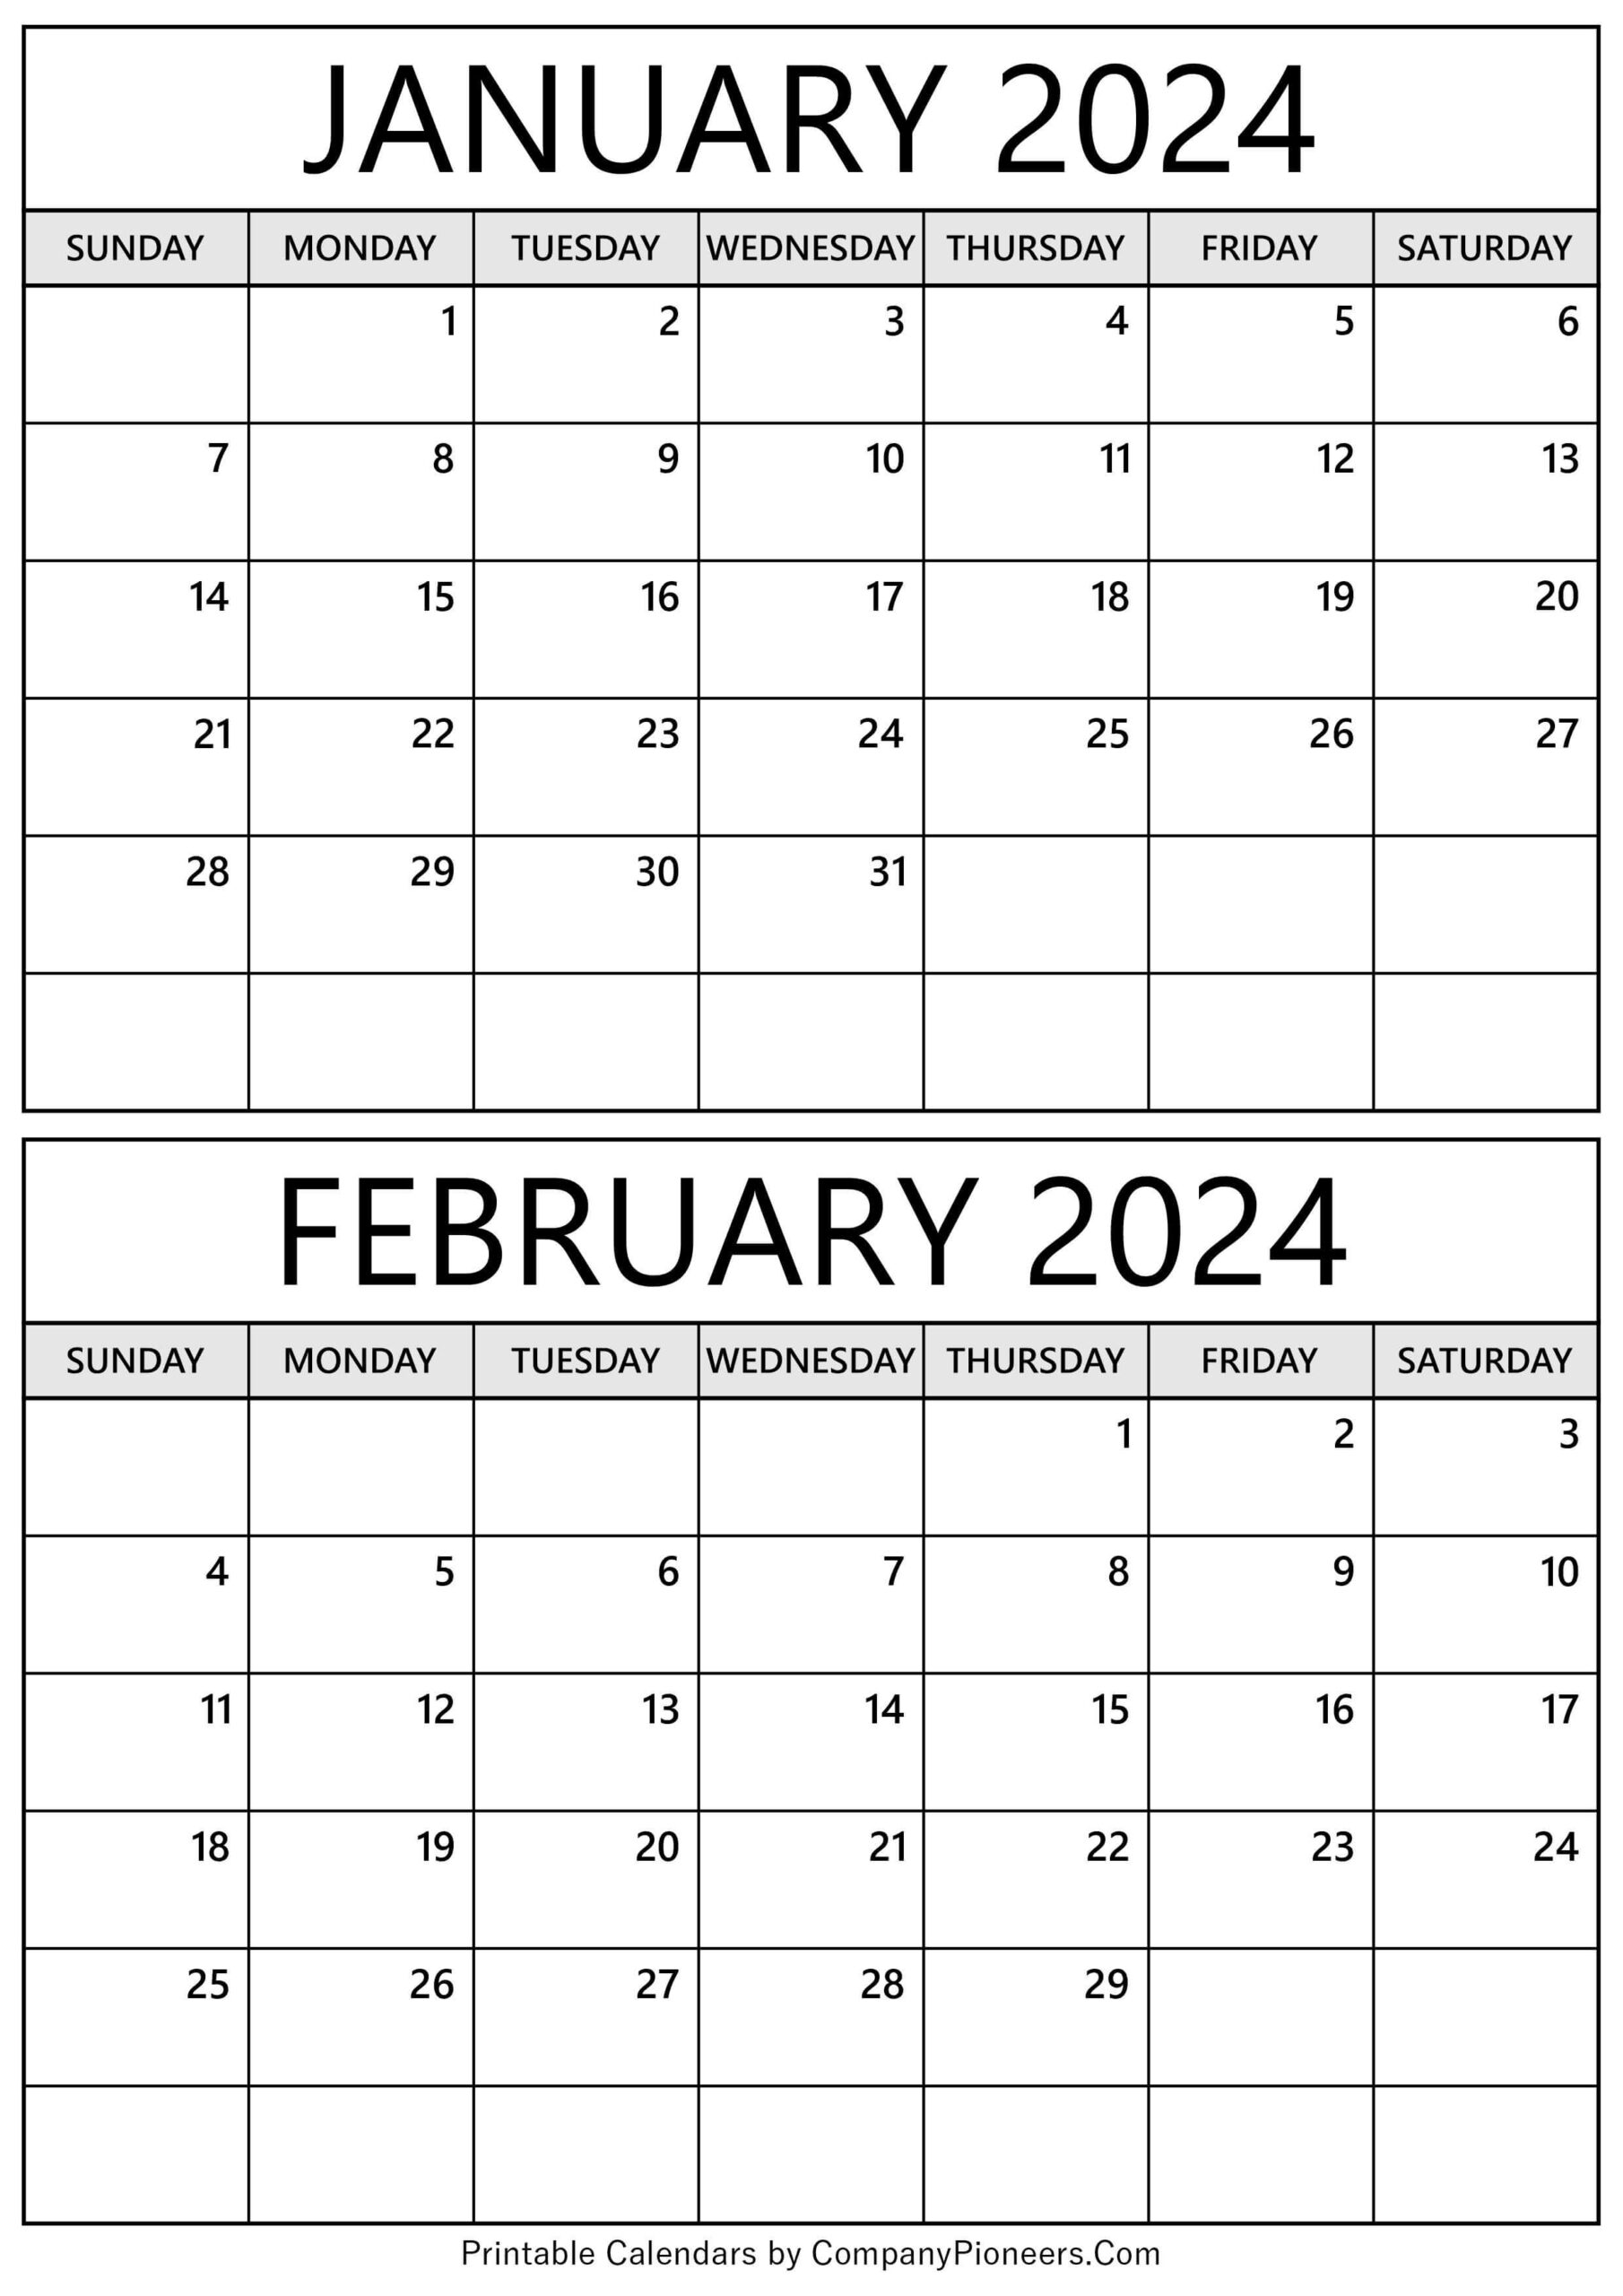 January February 2024 Calendar Printable - Template for Printable Calendar January February 2024